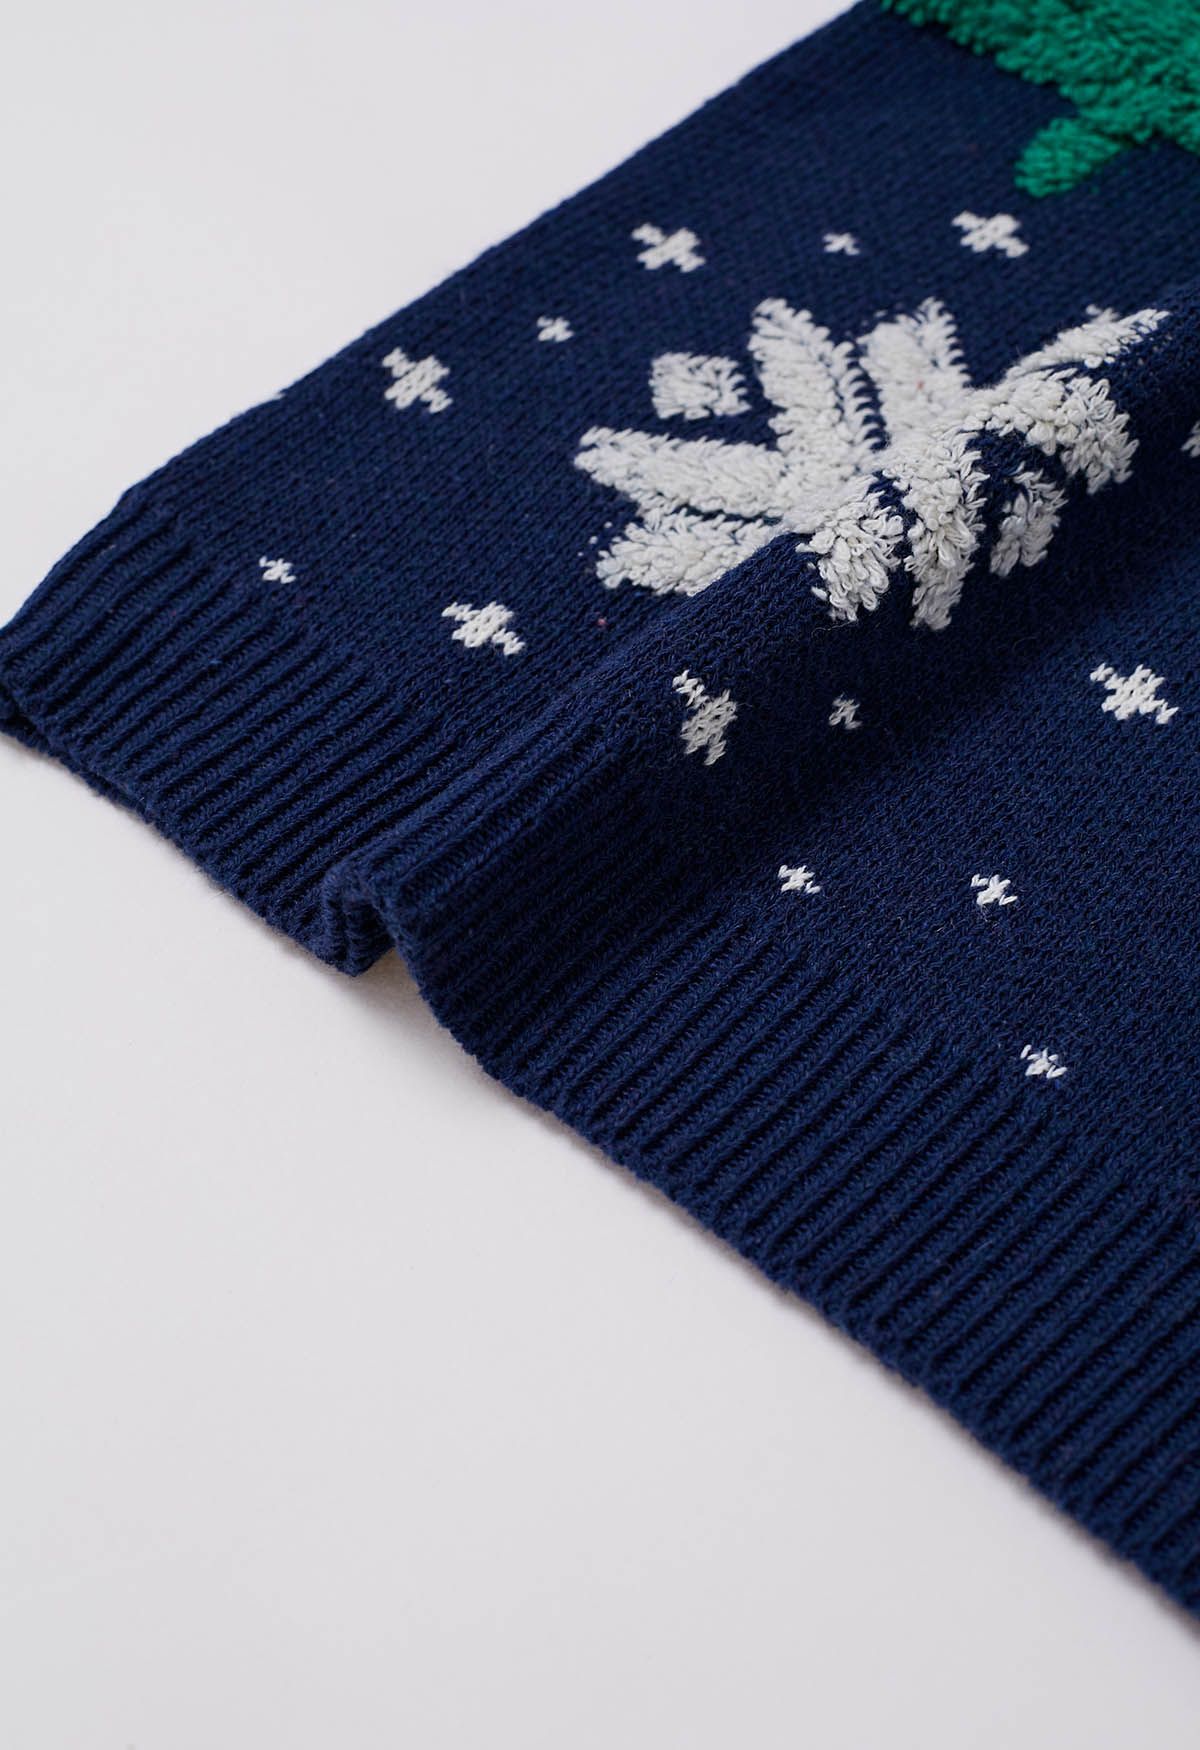 Christmas Tree and Snowflake Jacquard Knit Sweater in Indigo